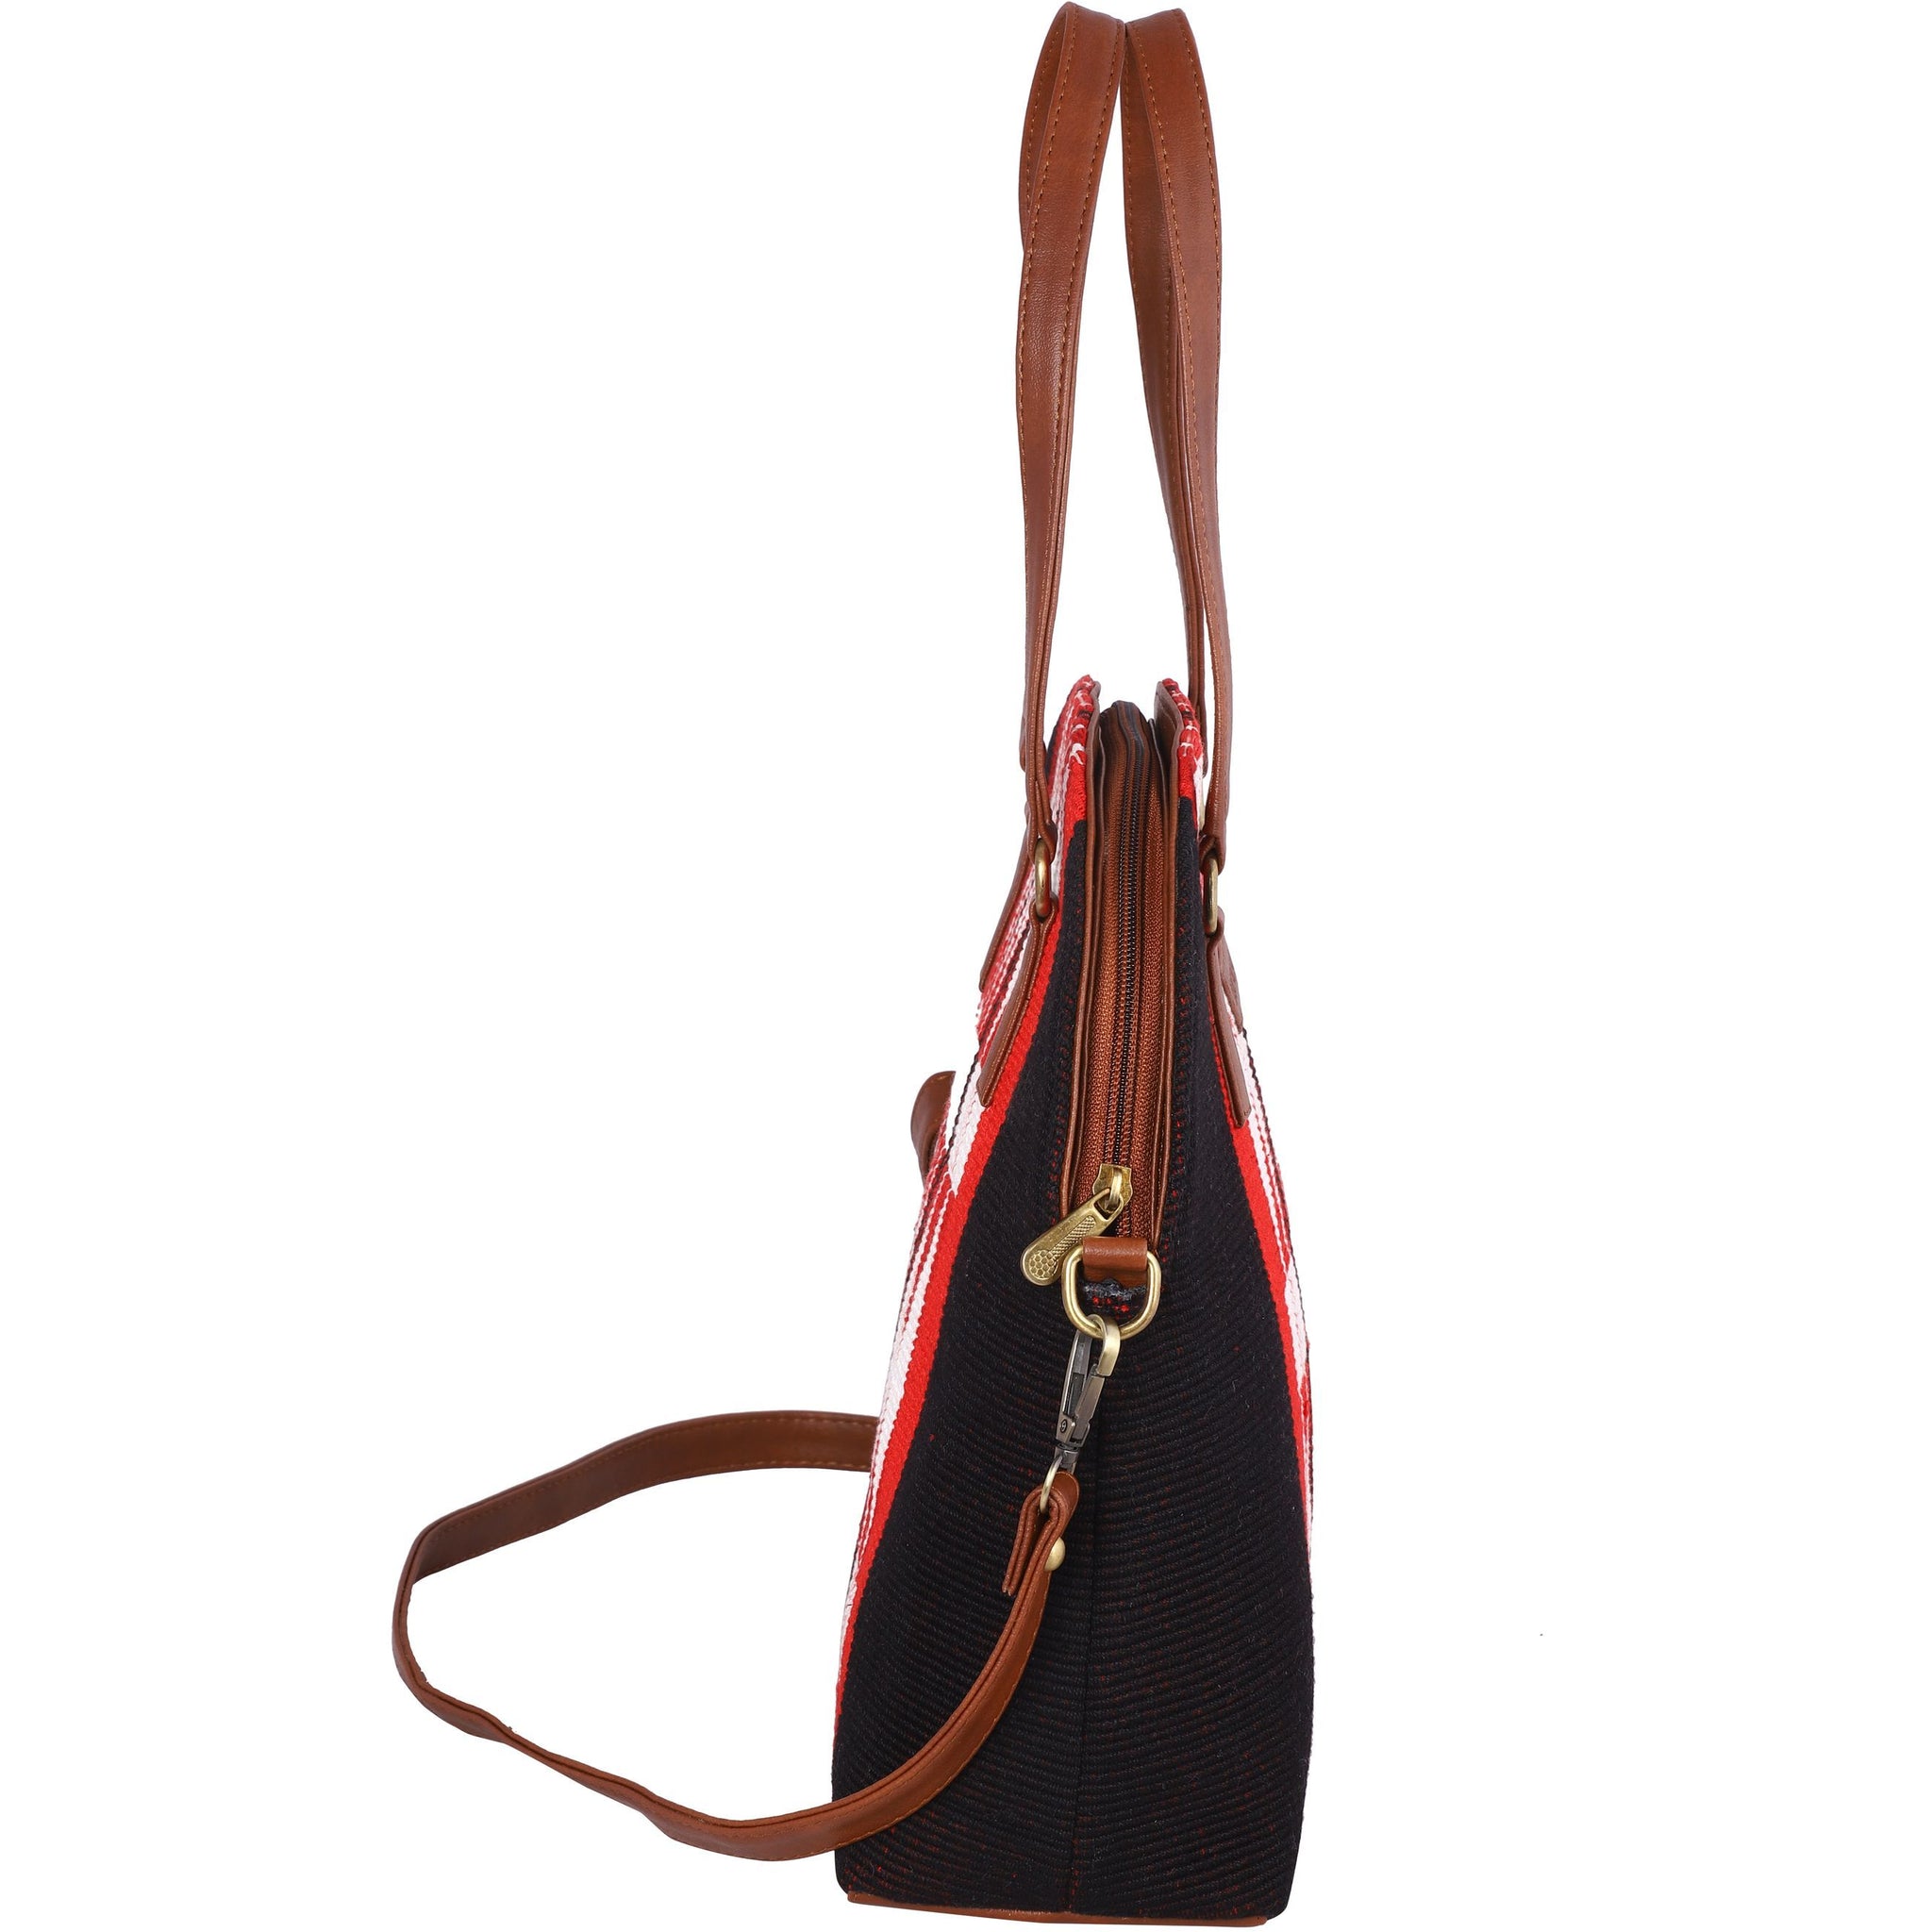 Womens handbag crafted from hill tribe naga textile, Crossbody bag, Vegan leather bag